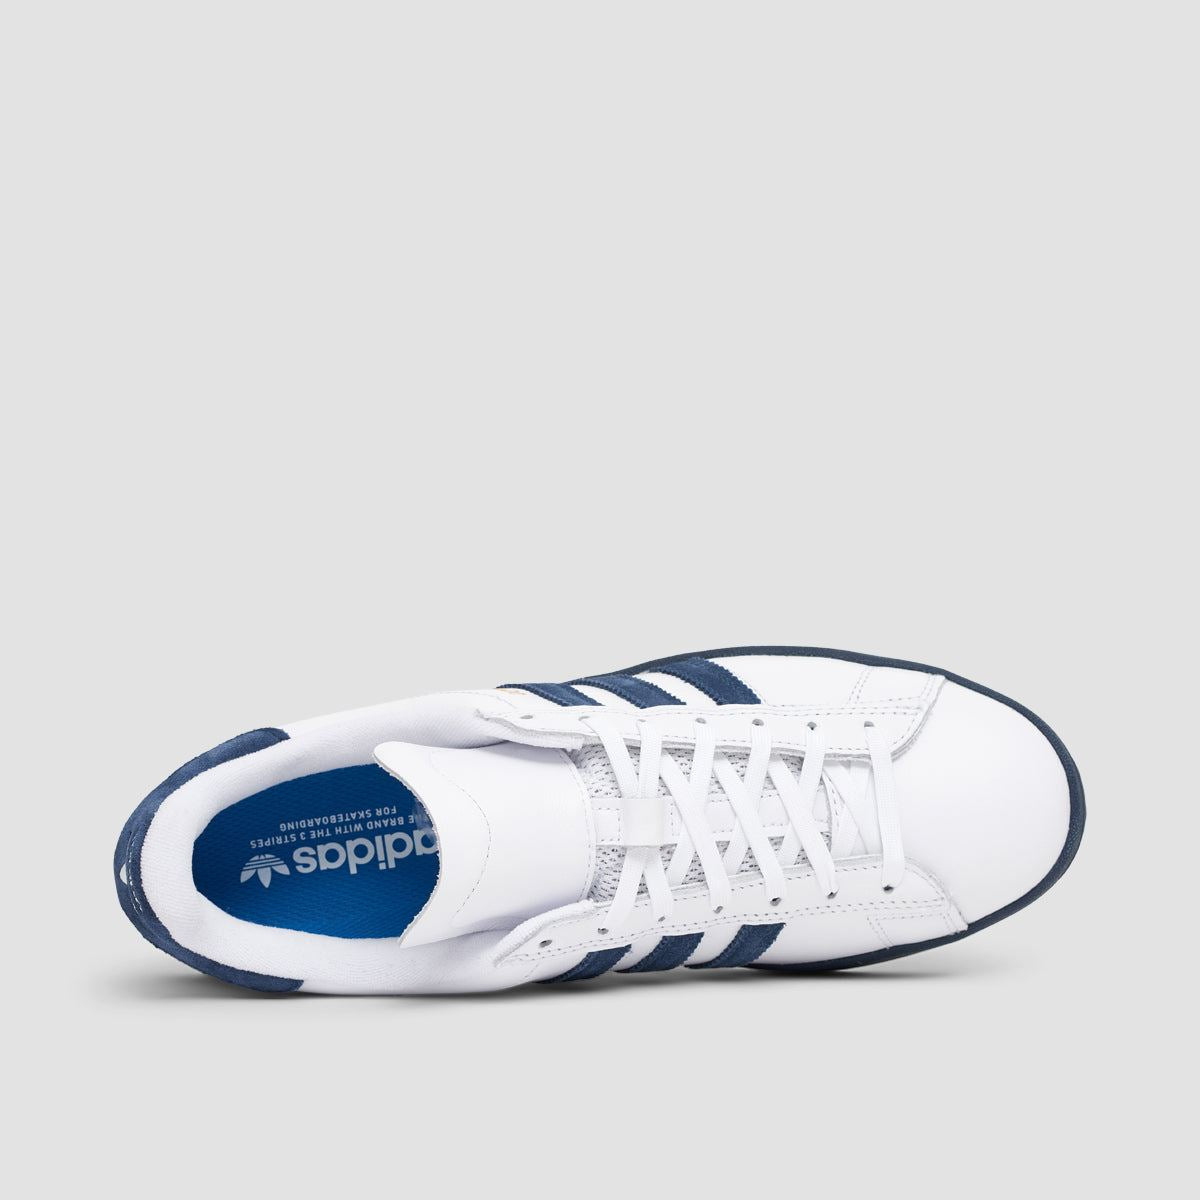 adidas Campus ADV Shoes - Footwear White/Collegiate Navy/Bluebird